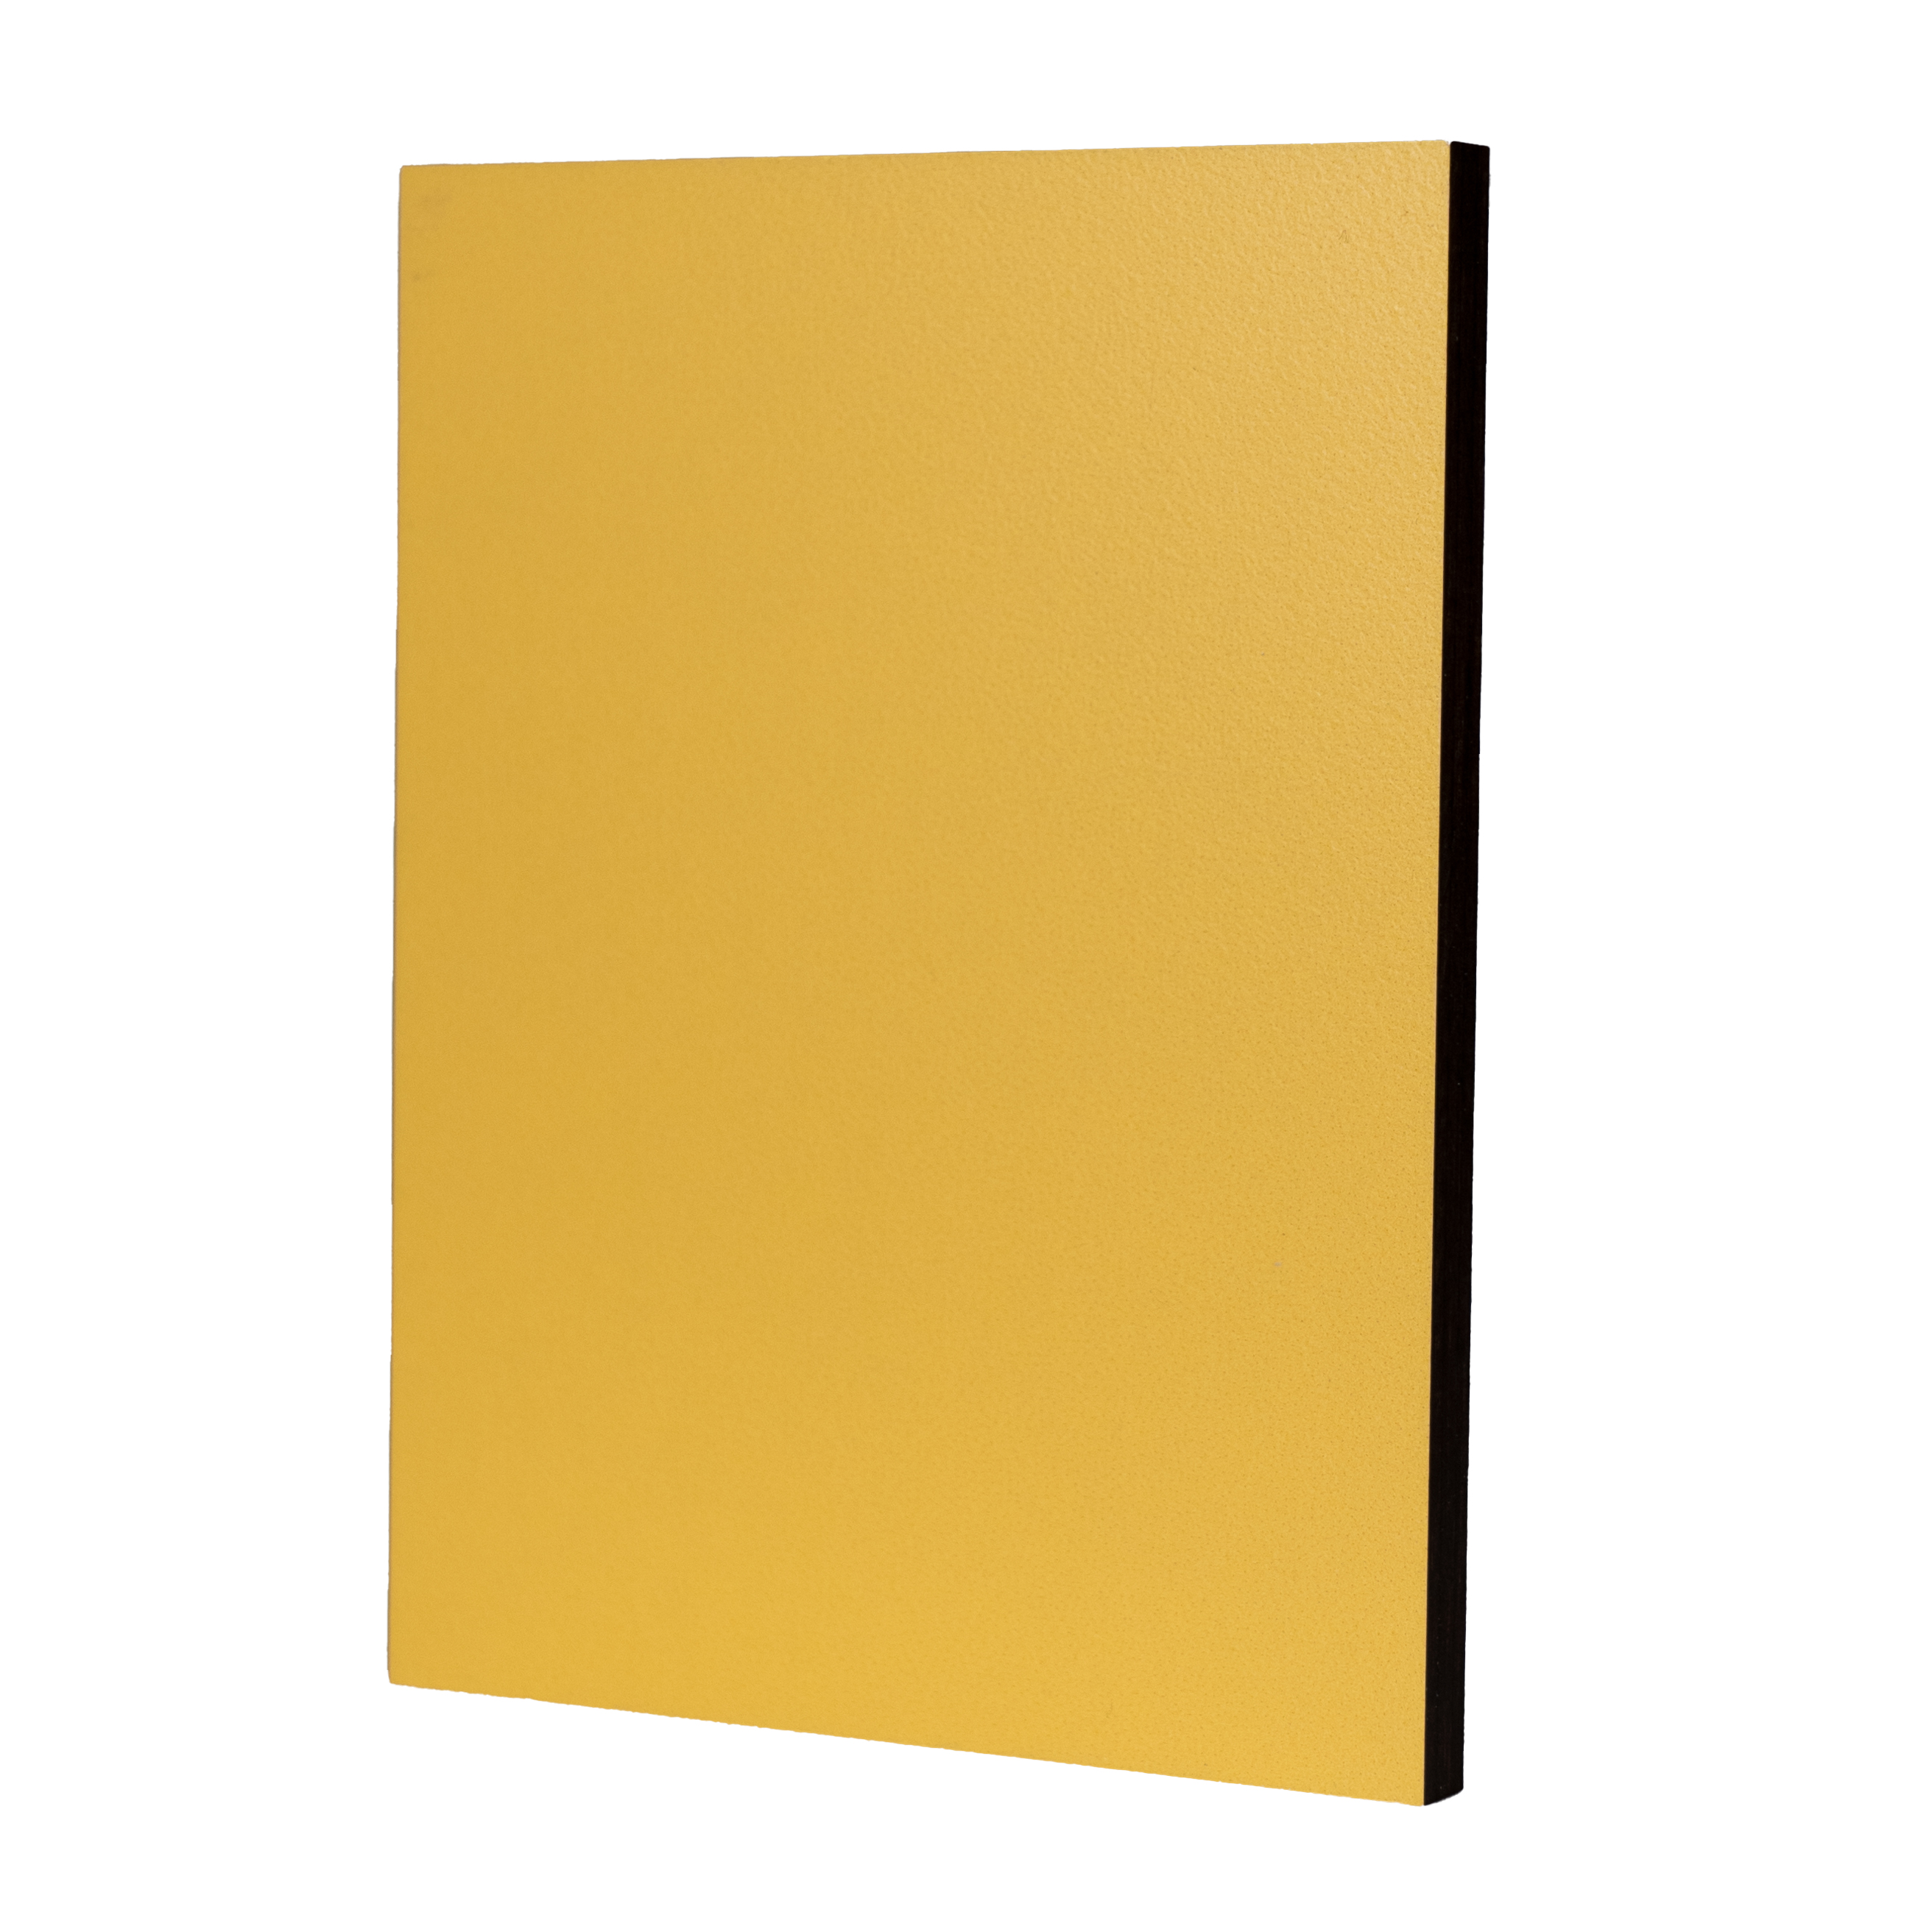 HPL Platten | Sonnenschein Gelb  - Kronoart® Premium Color